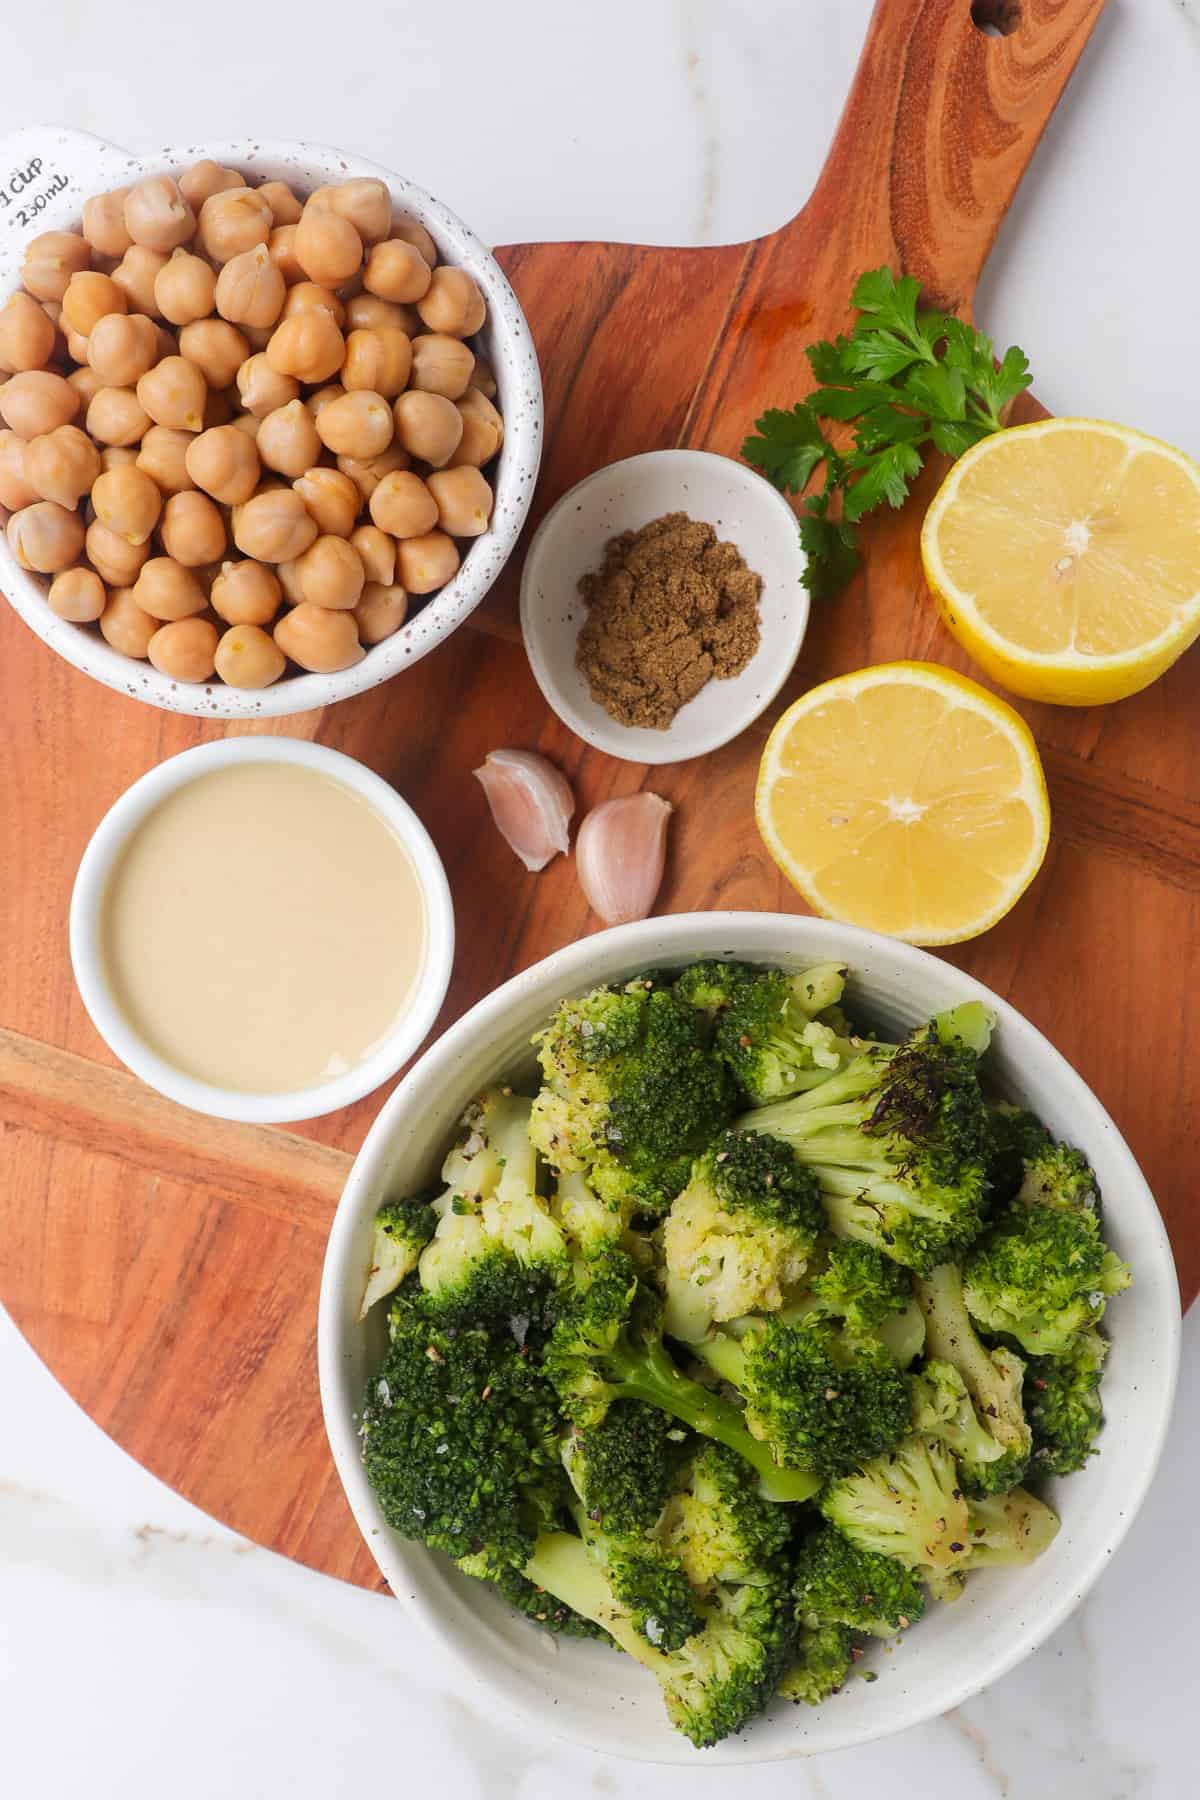 Ingredients needed to make broccoli hummus shown.